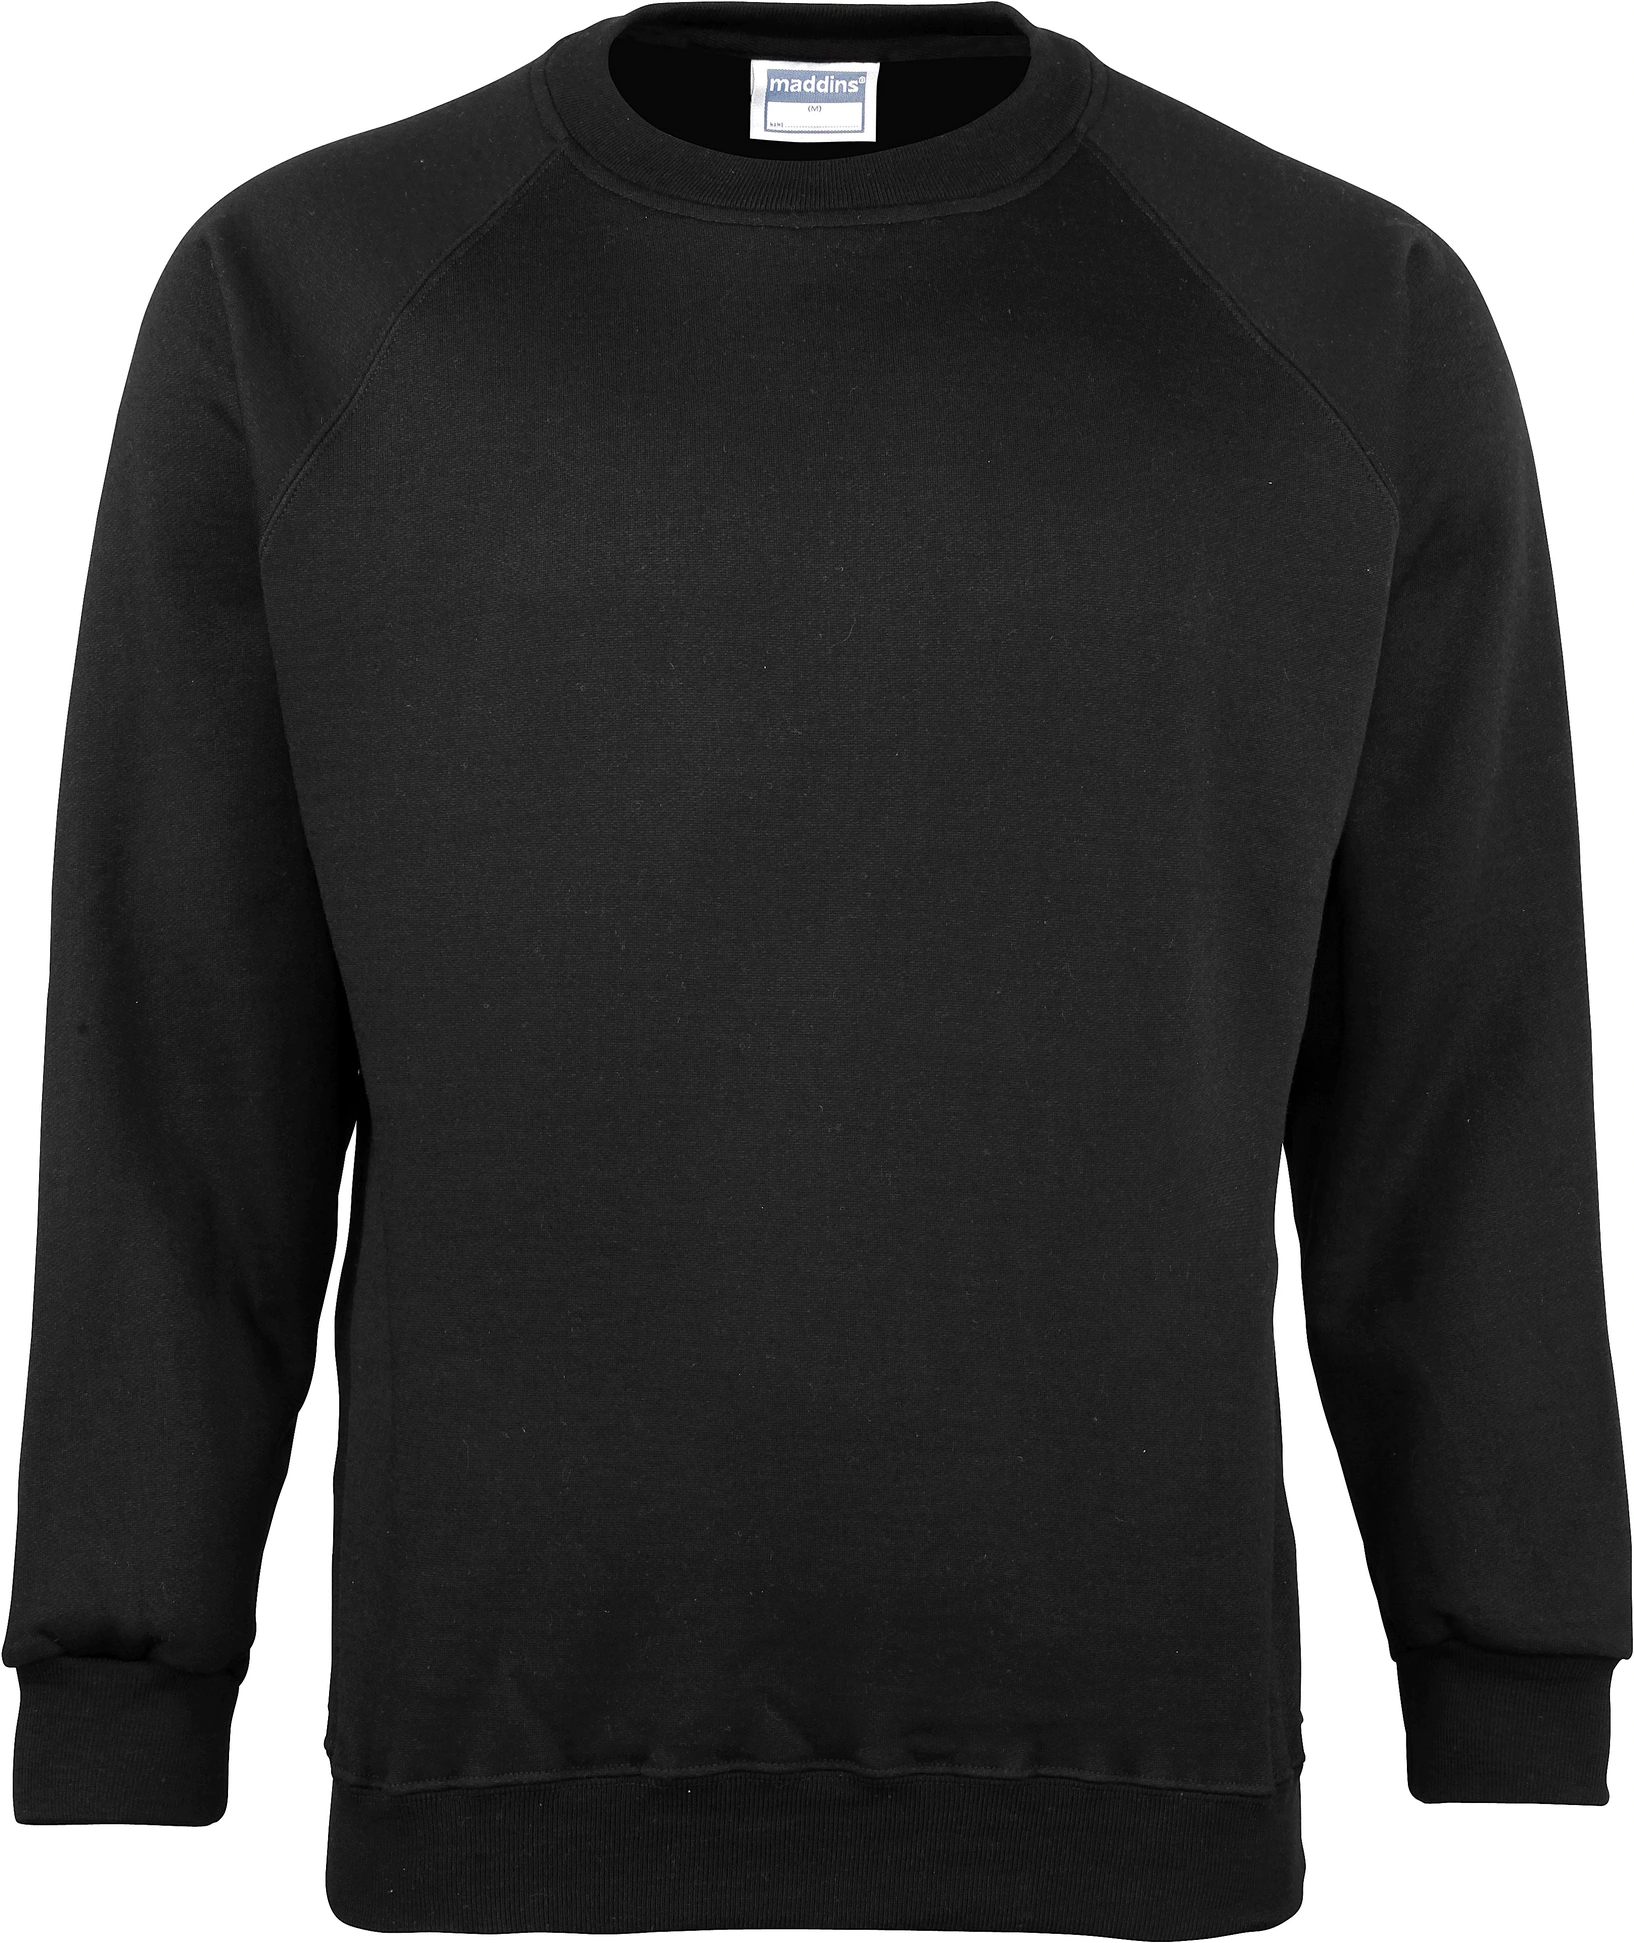 Maddins Sweatshirt Sweater With Round Neck Coloursure